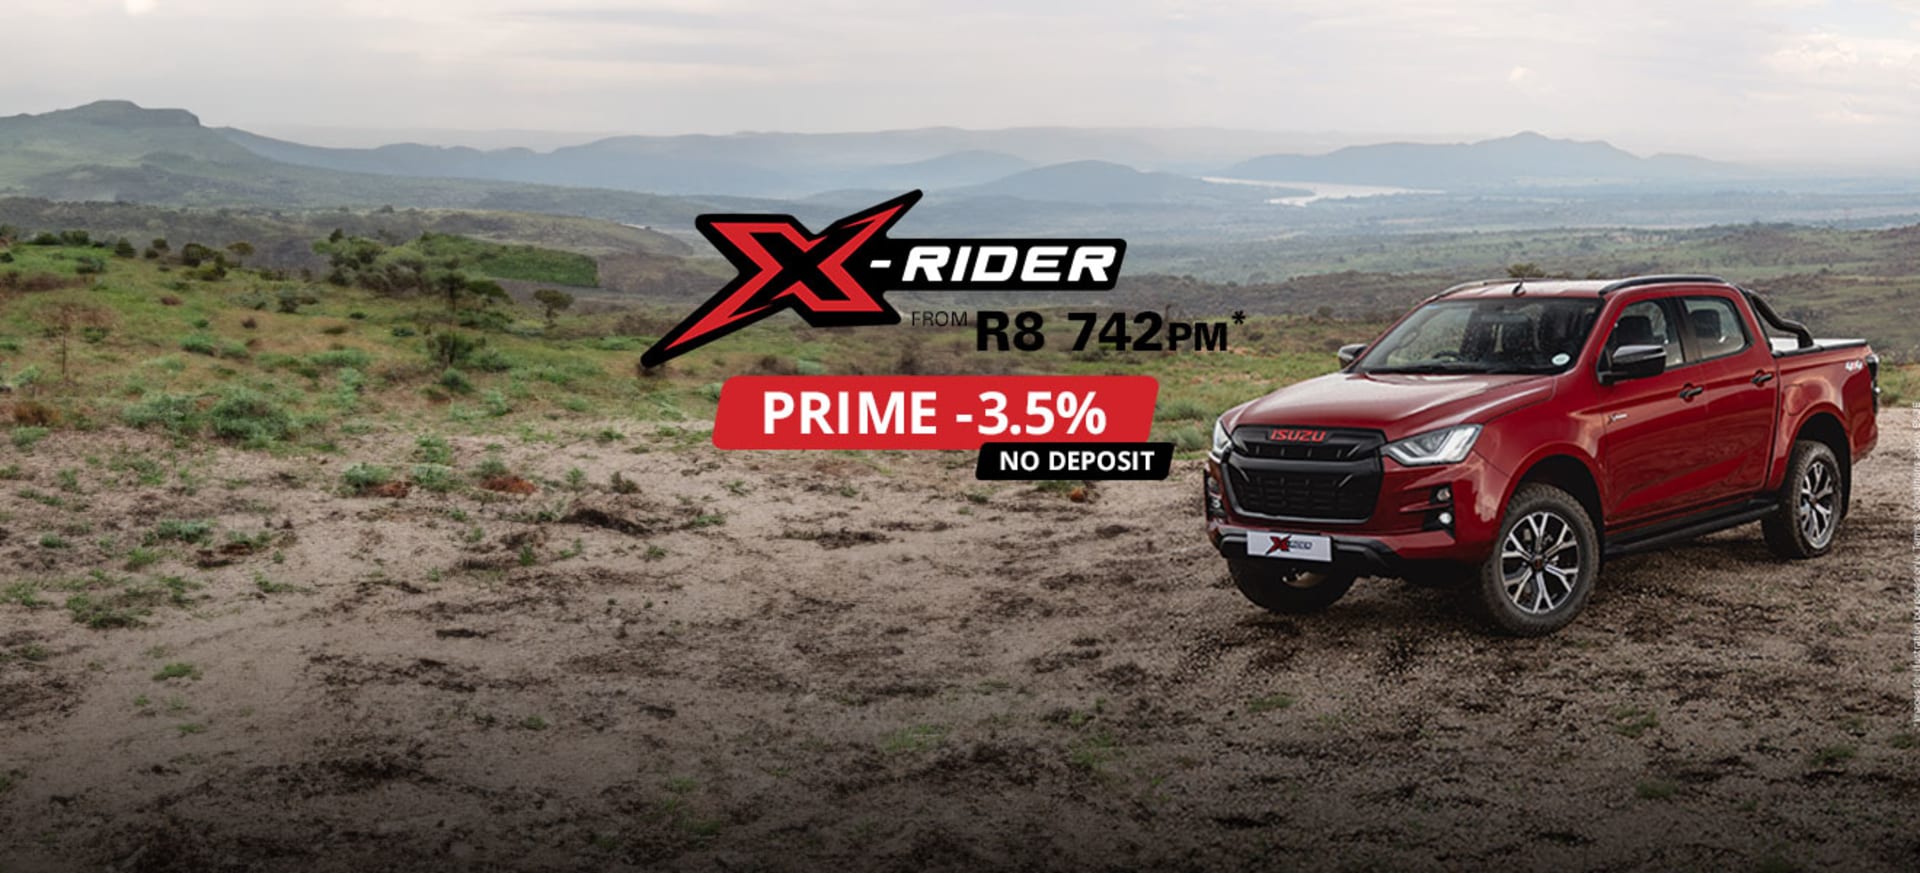 ISUZU X-Rider Prime -3.5% R8 742pm